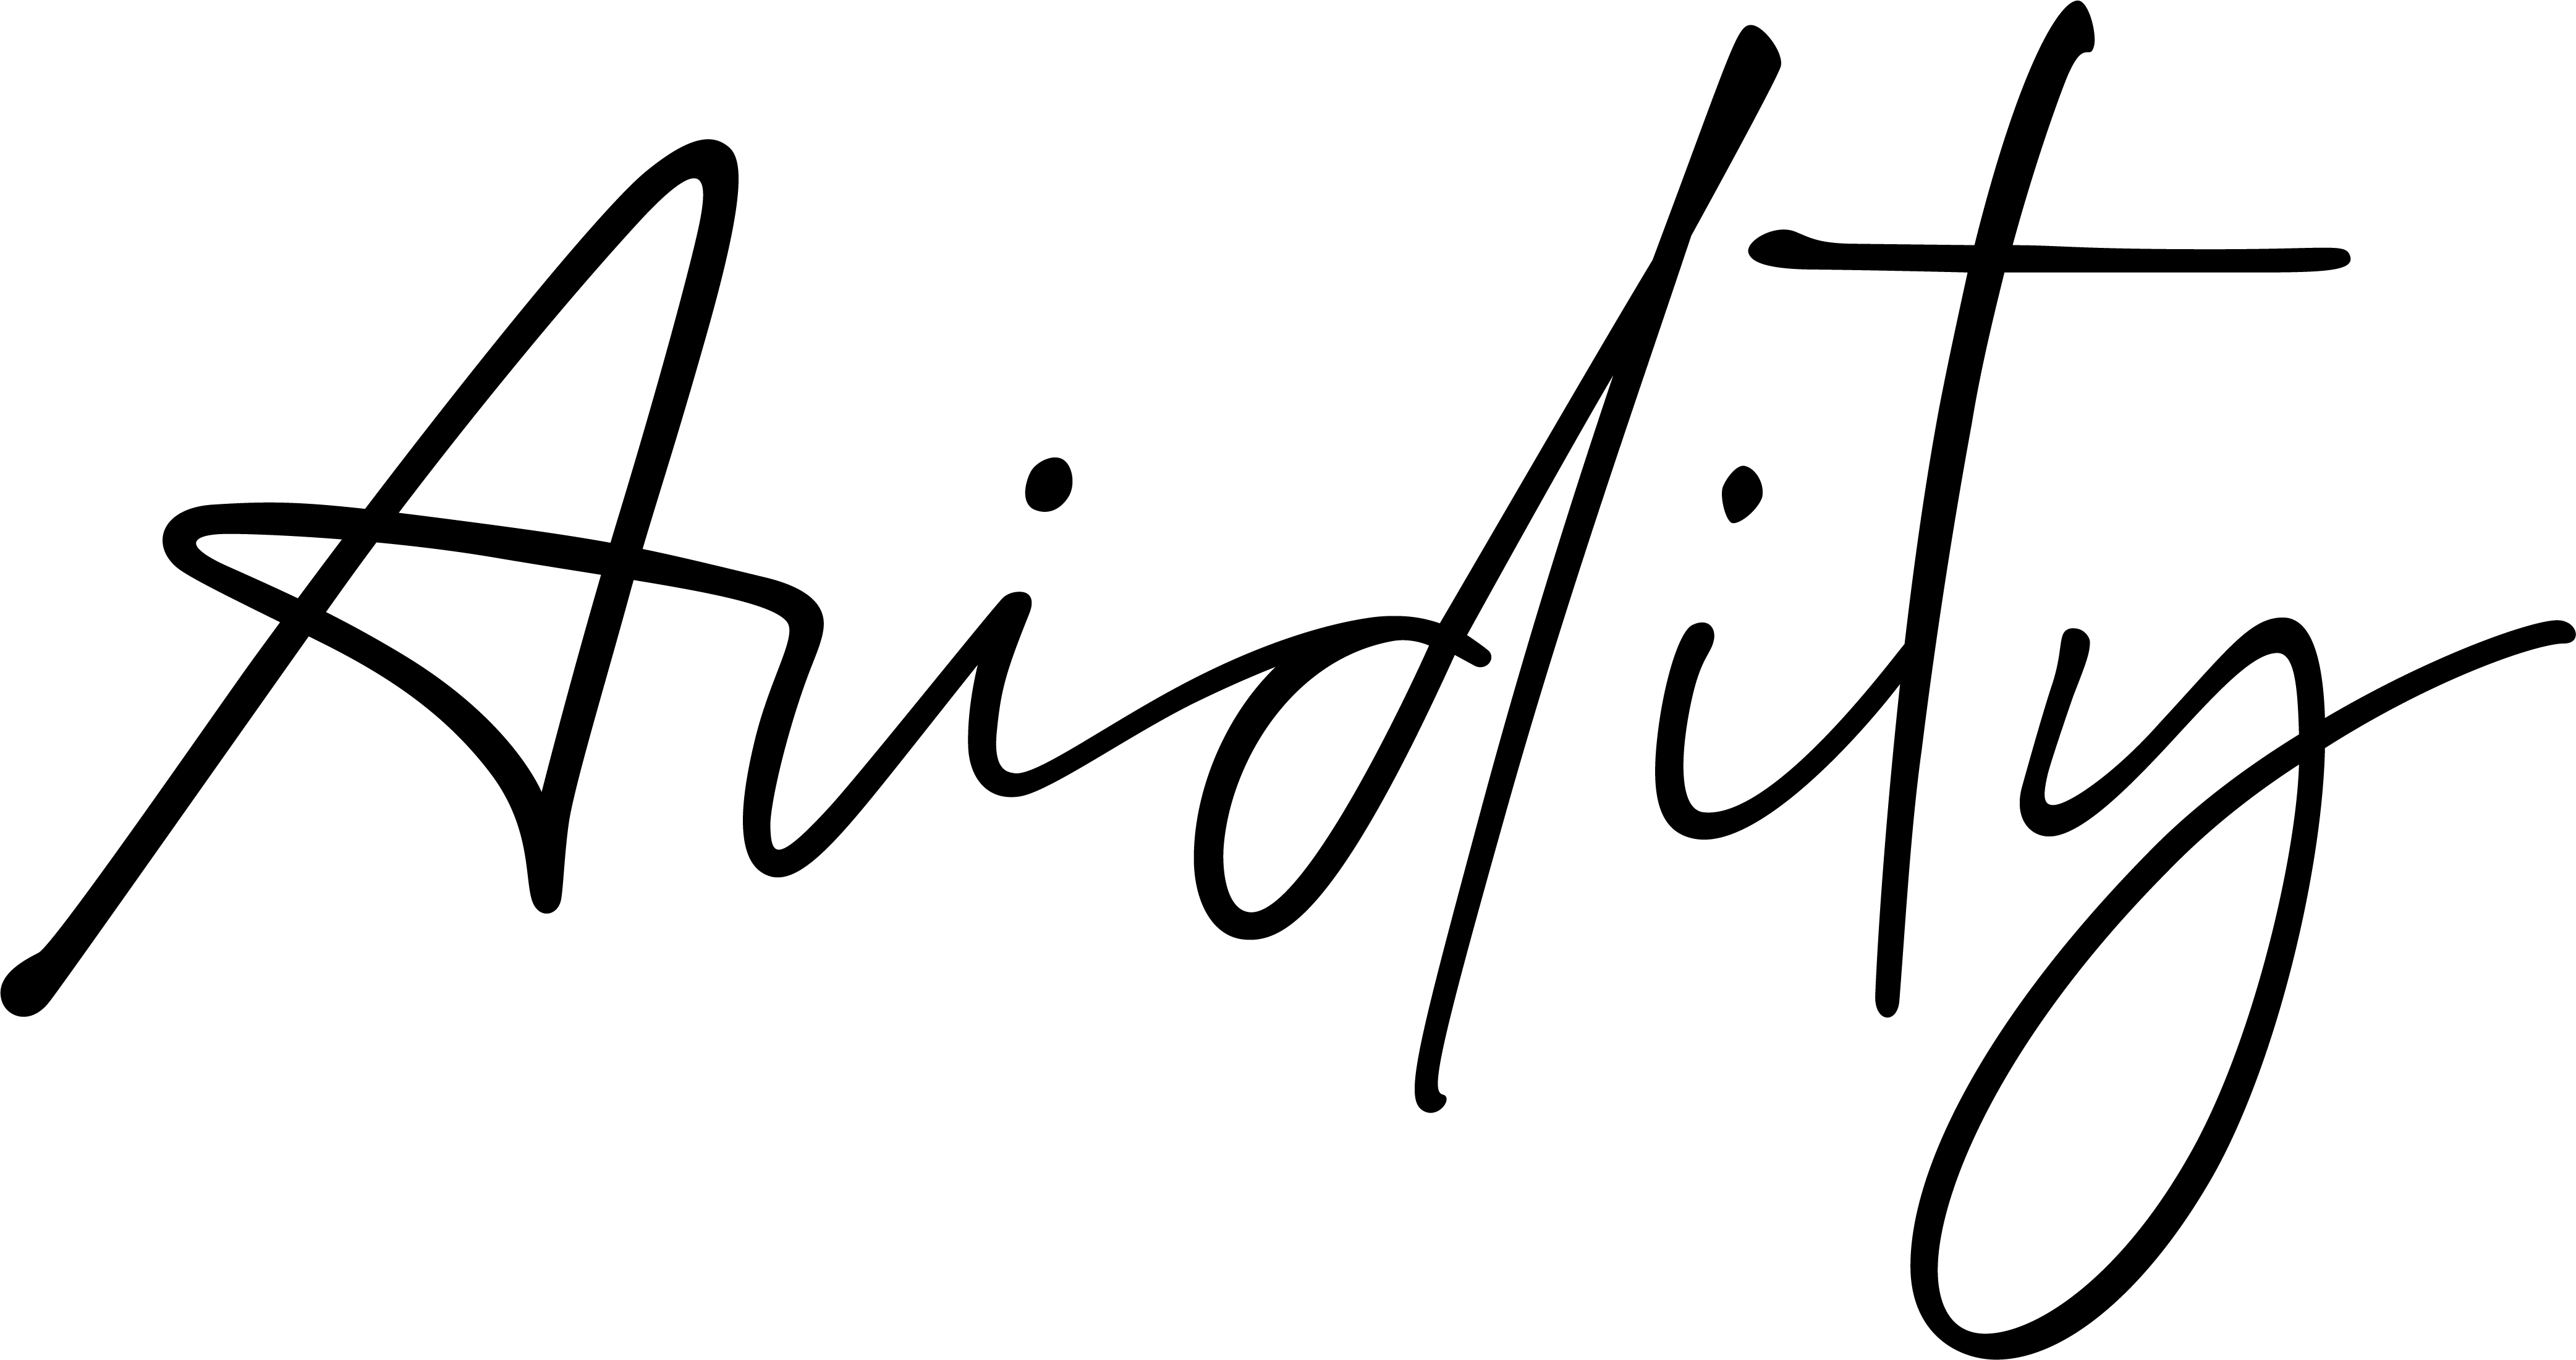 Avidity logo_black_RGB-2